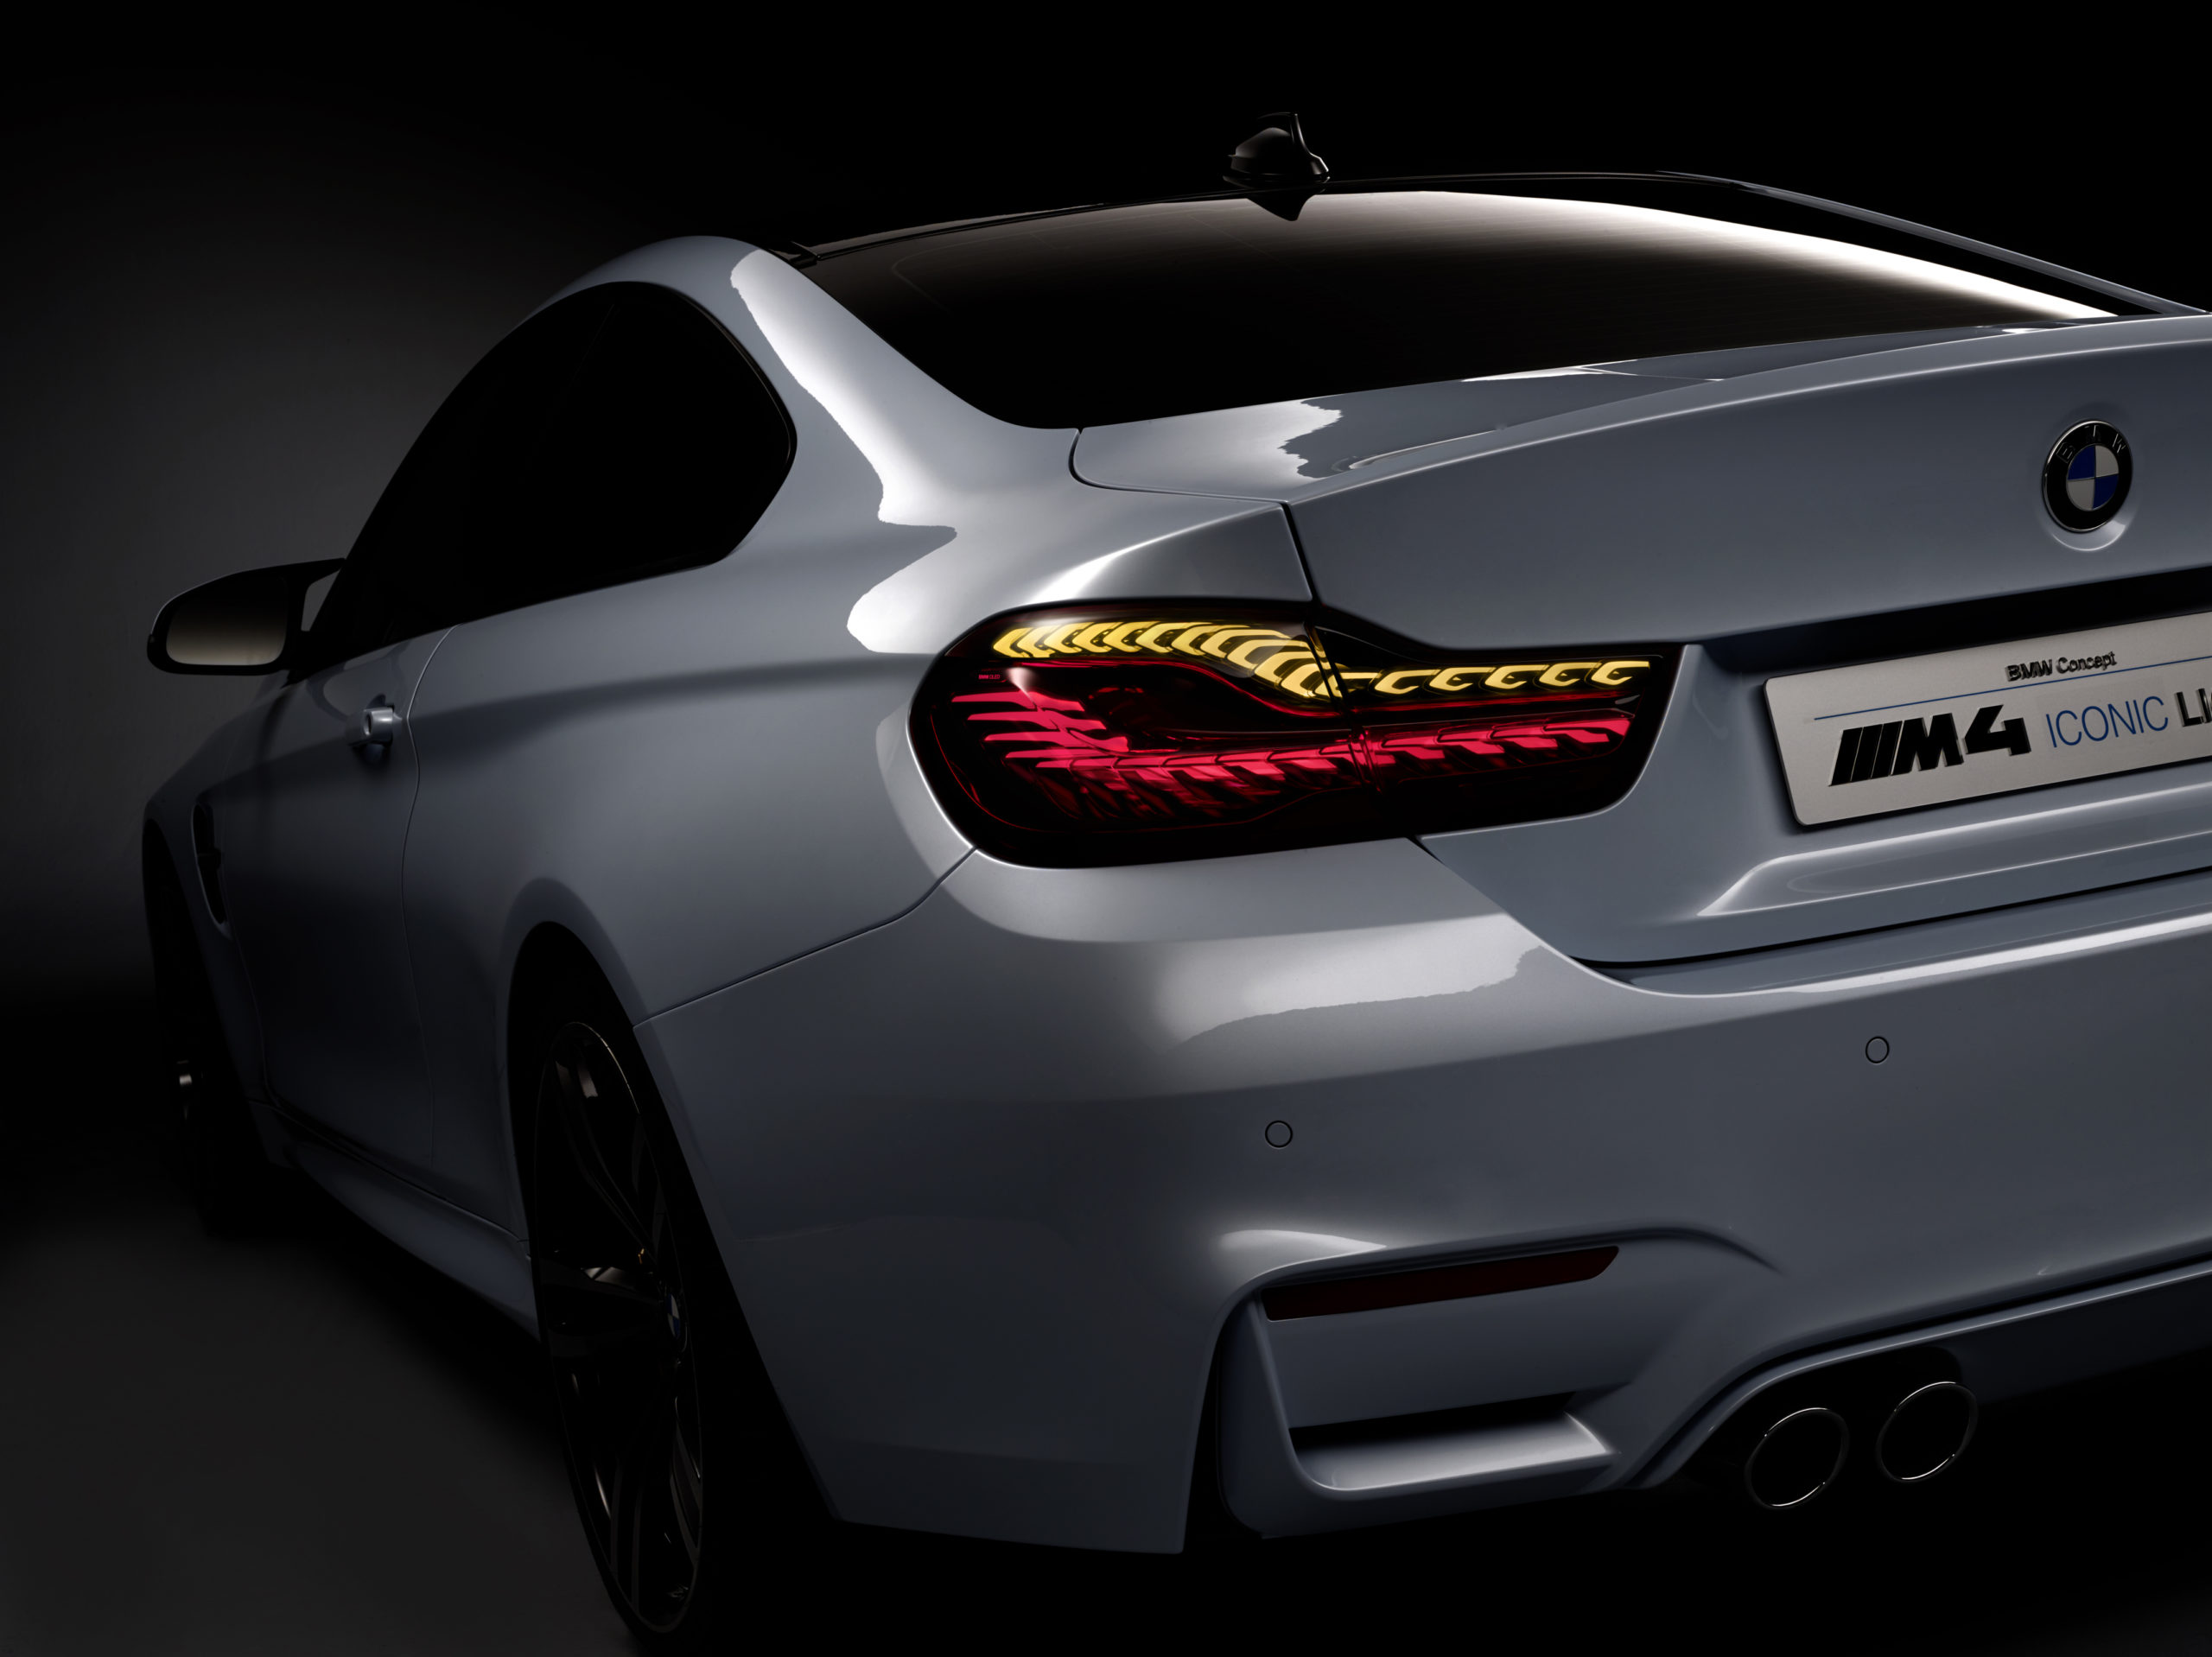 CES 2015: Let the BMW M4 Concept Iconic Lights shine